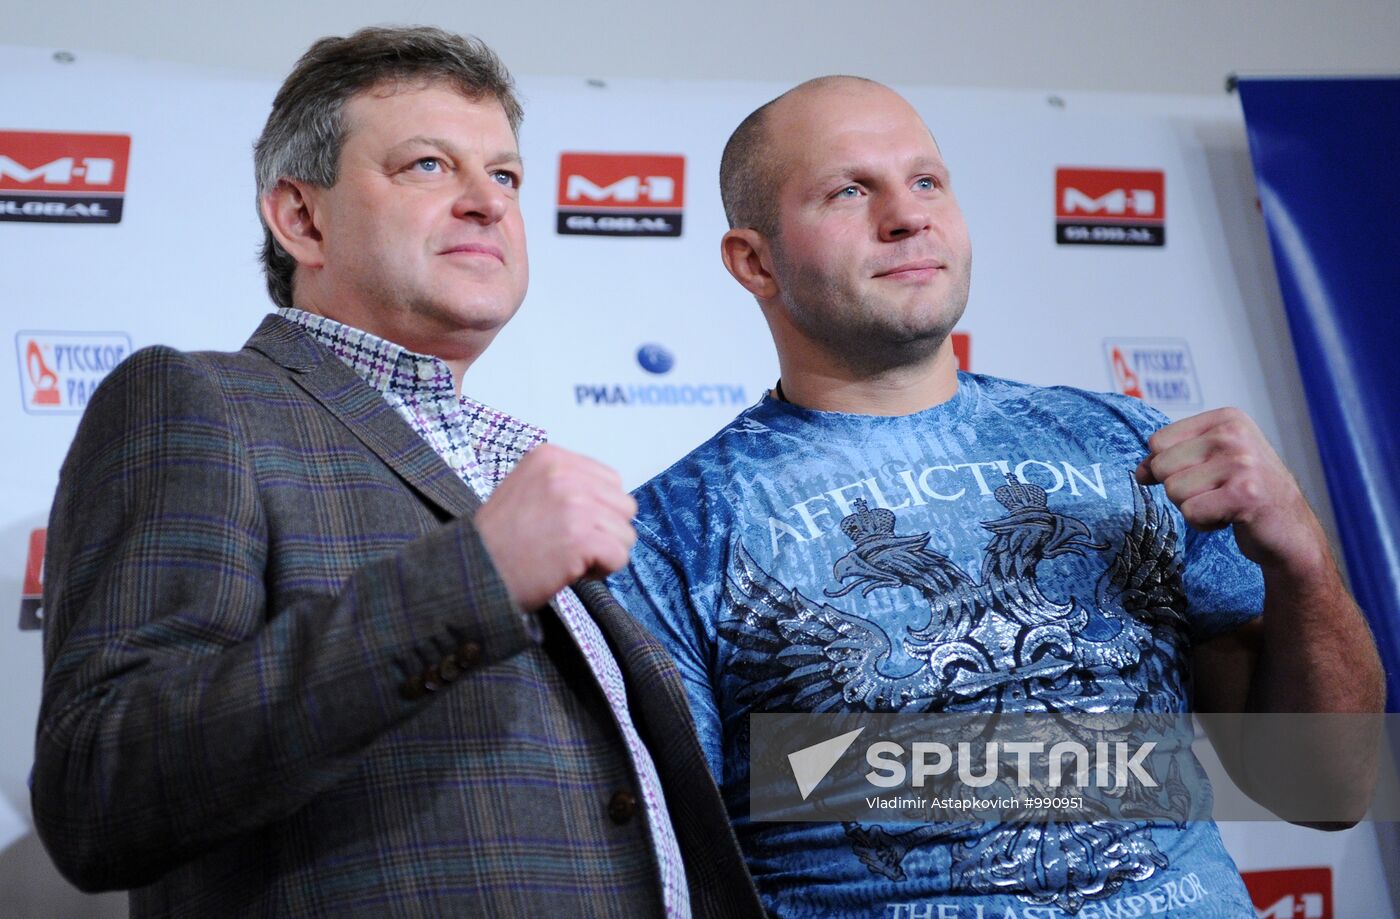 Press conference before fight - F. Emeliyanenko and Jeff Monson